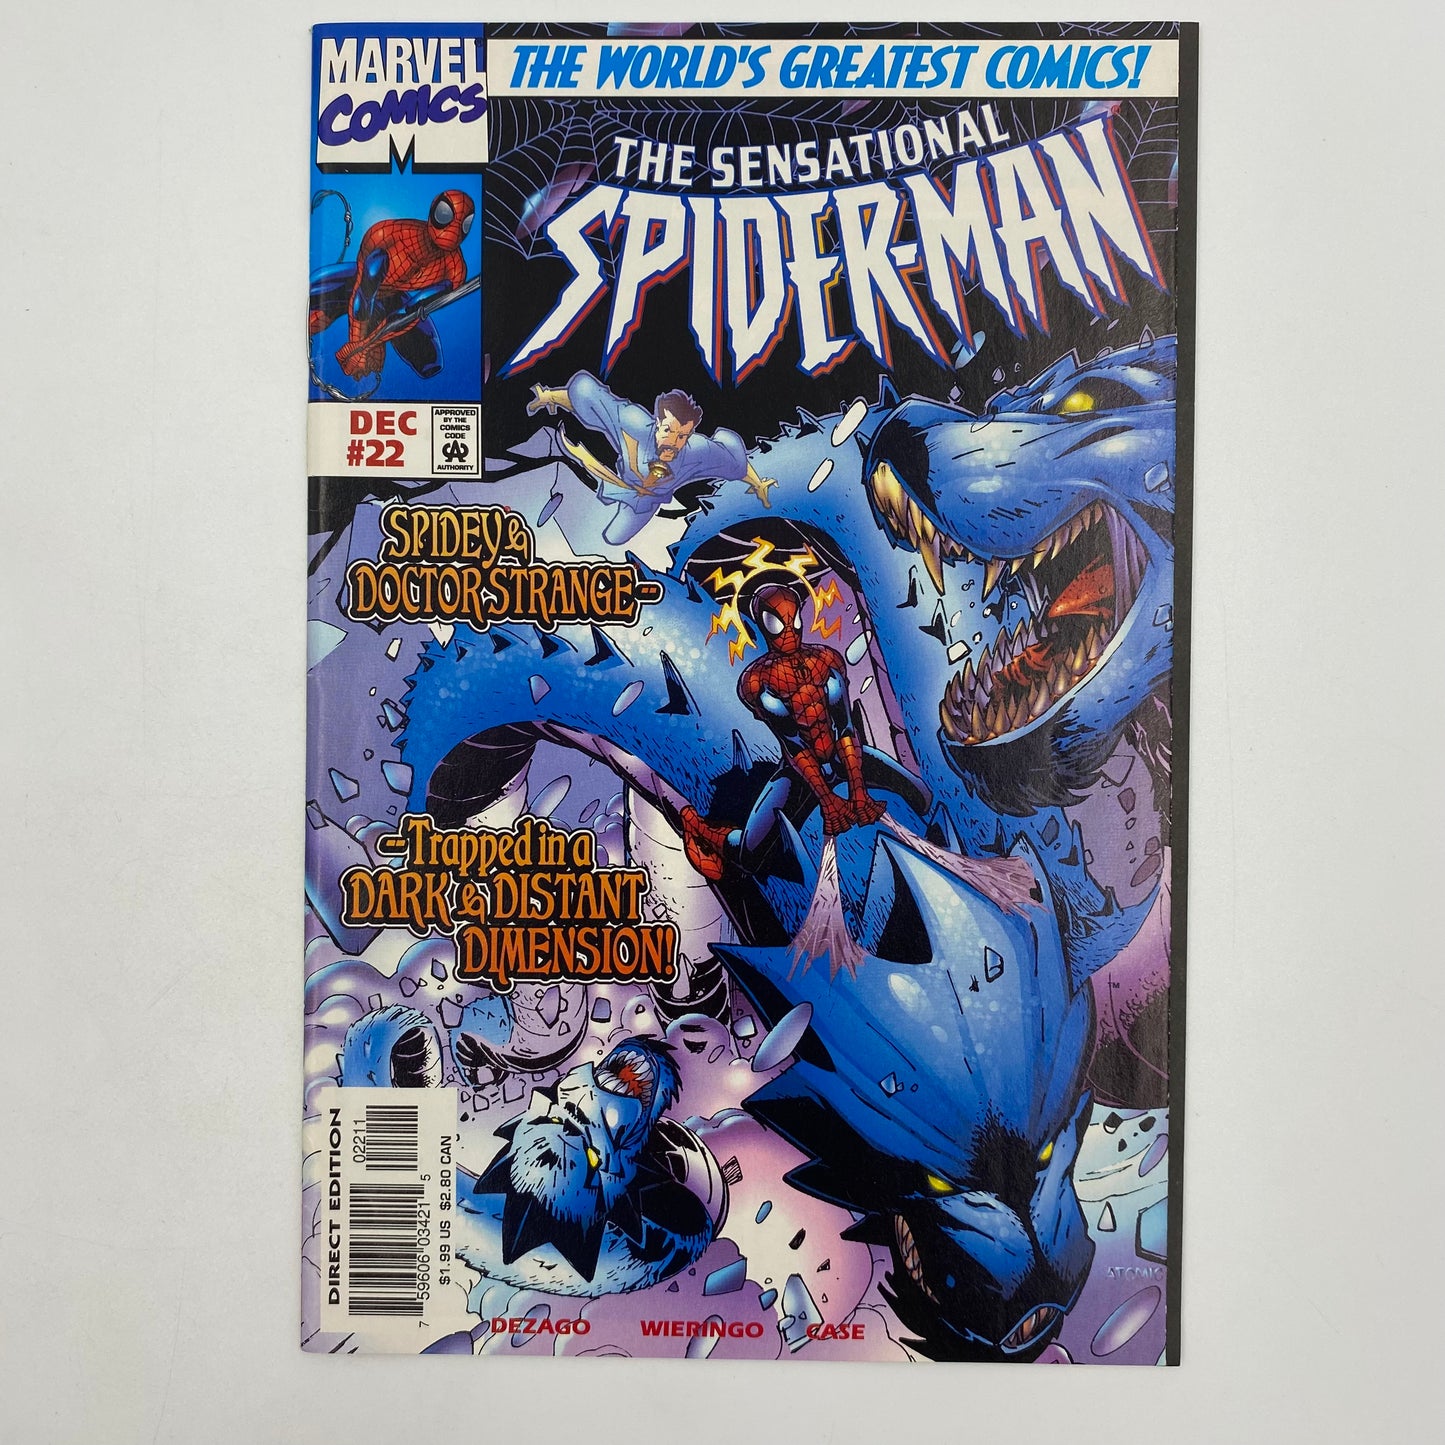 Sensational Spider-Man #21-23 (1997-1998) Marvel